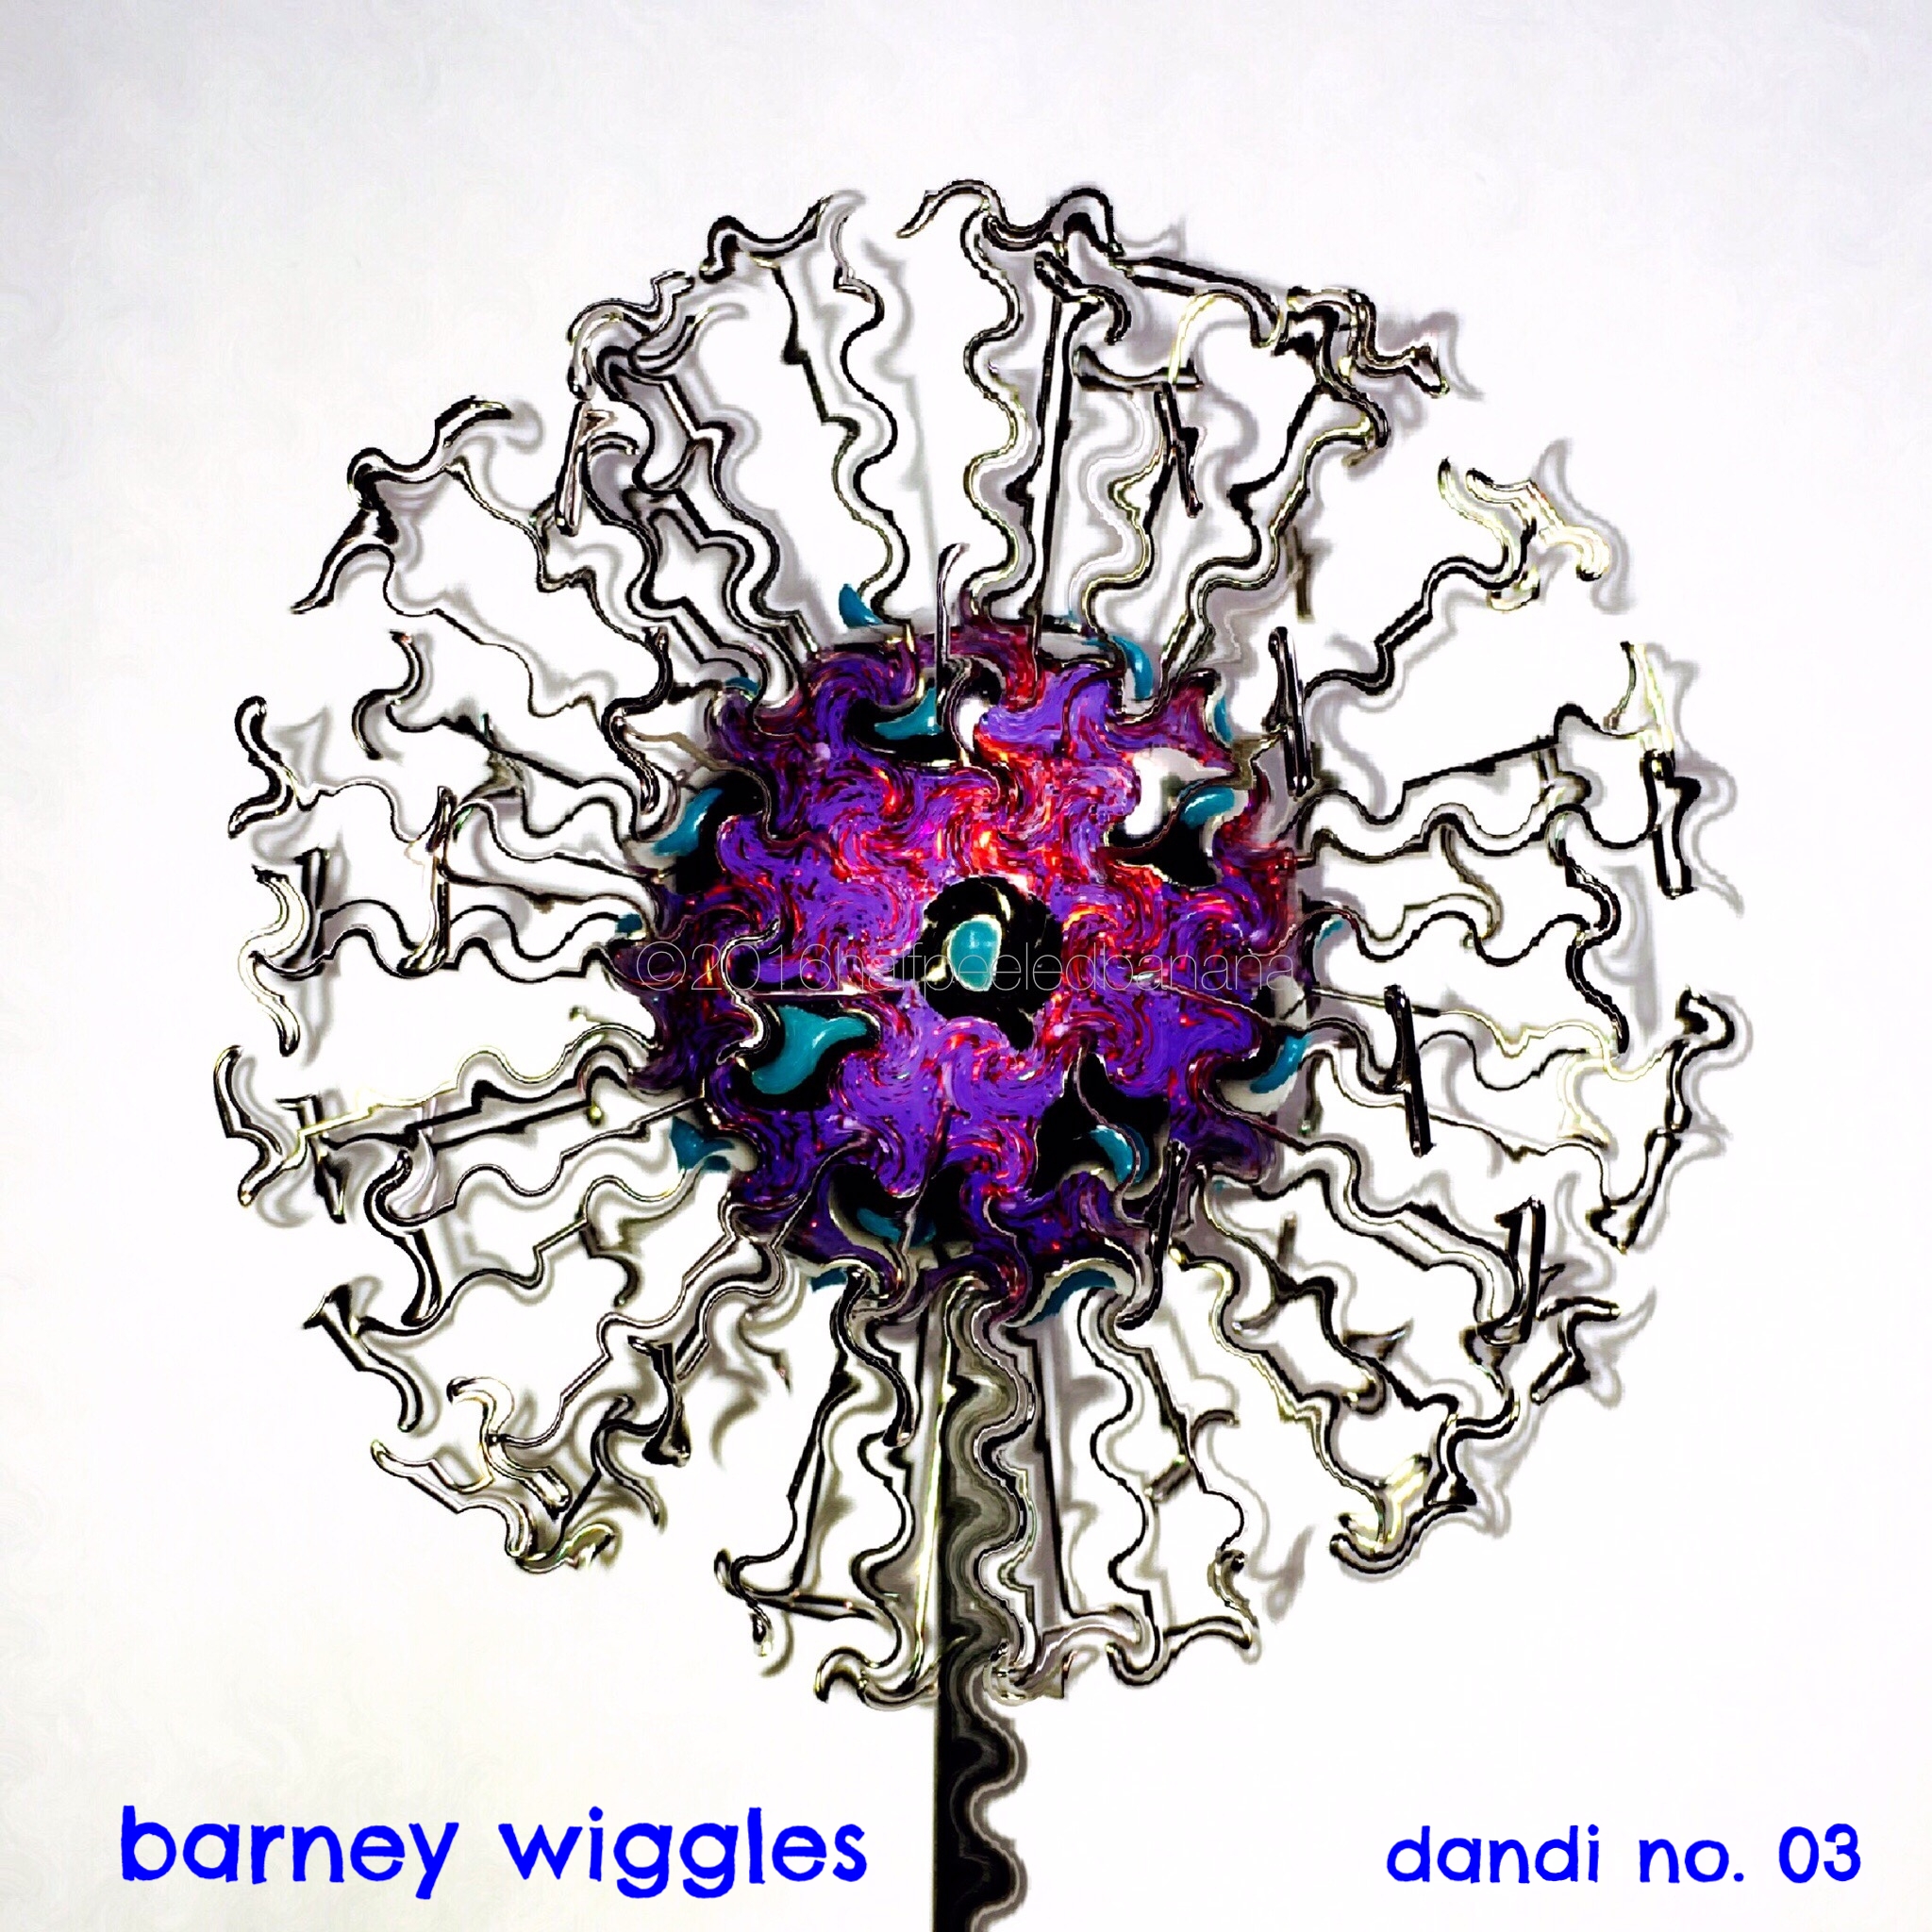 barney wiggles print - a frazzled dandi